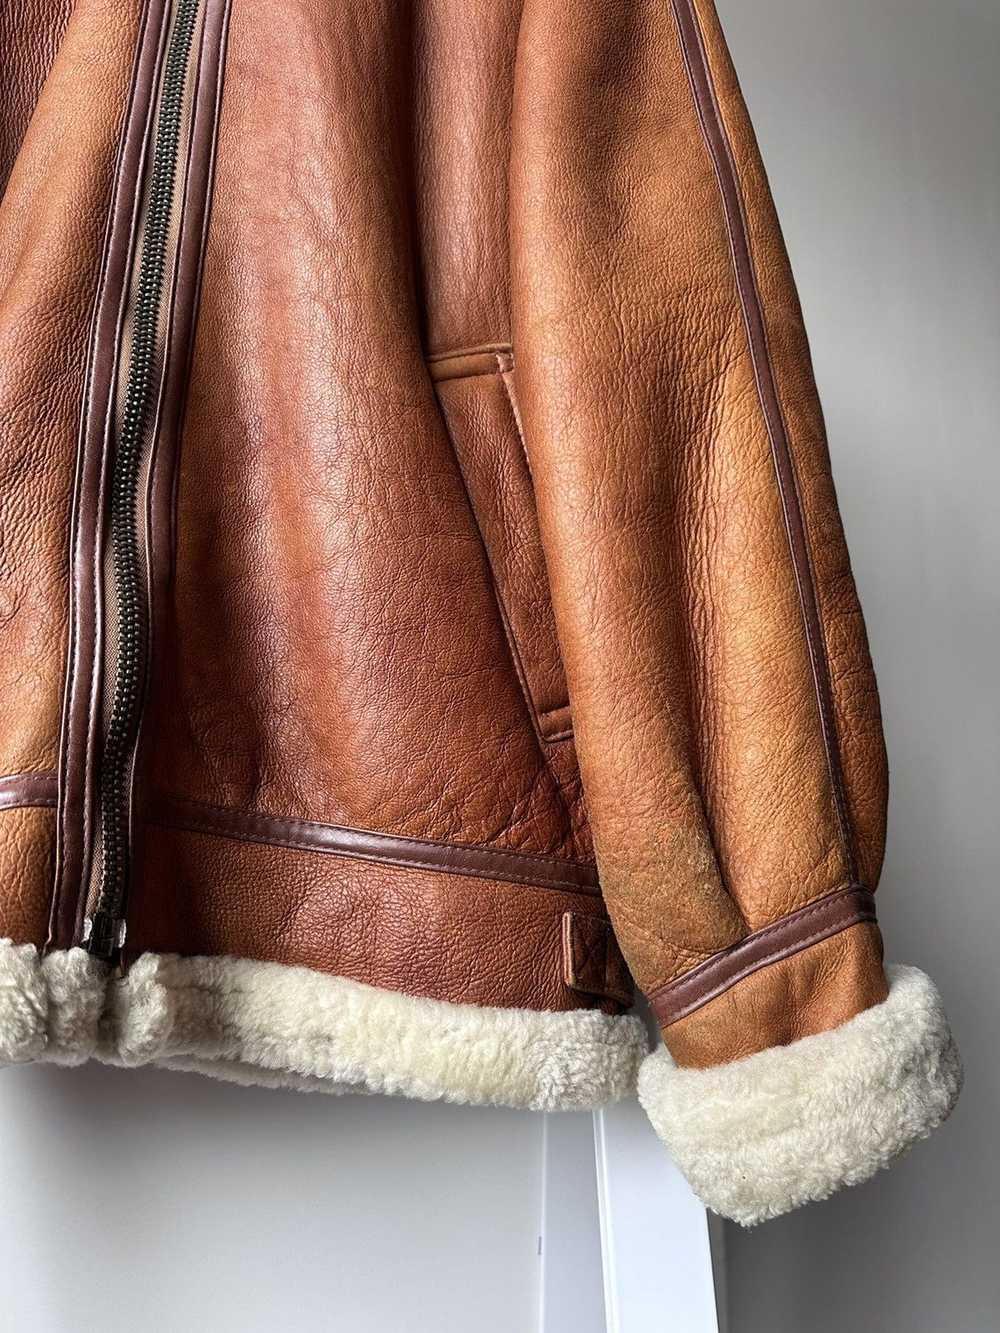 B 3 × Genuine Leather × Sheepskin Coat Vintage Sh… - image 7